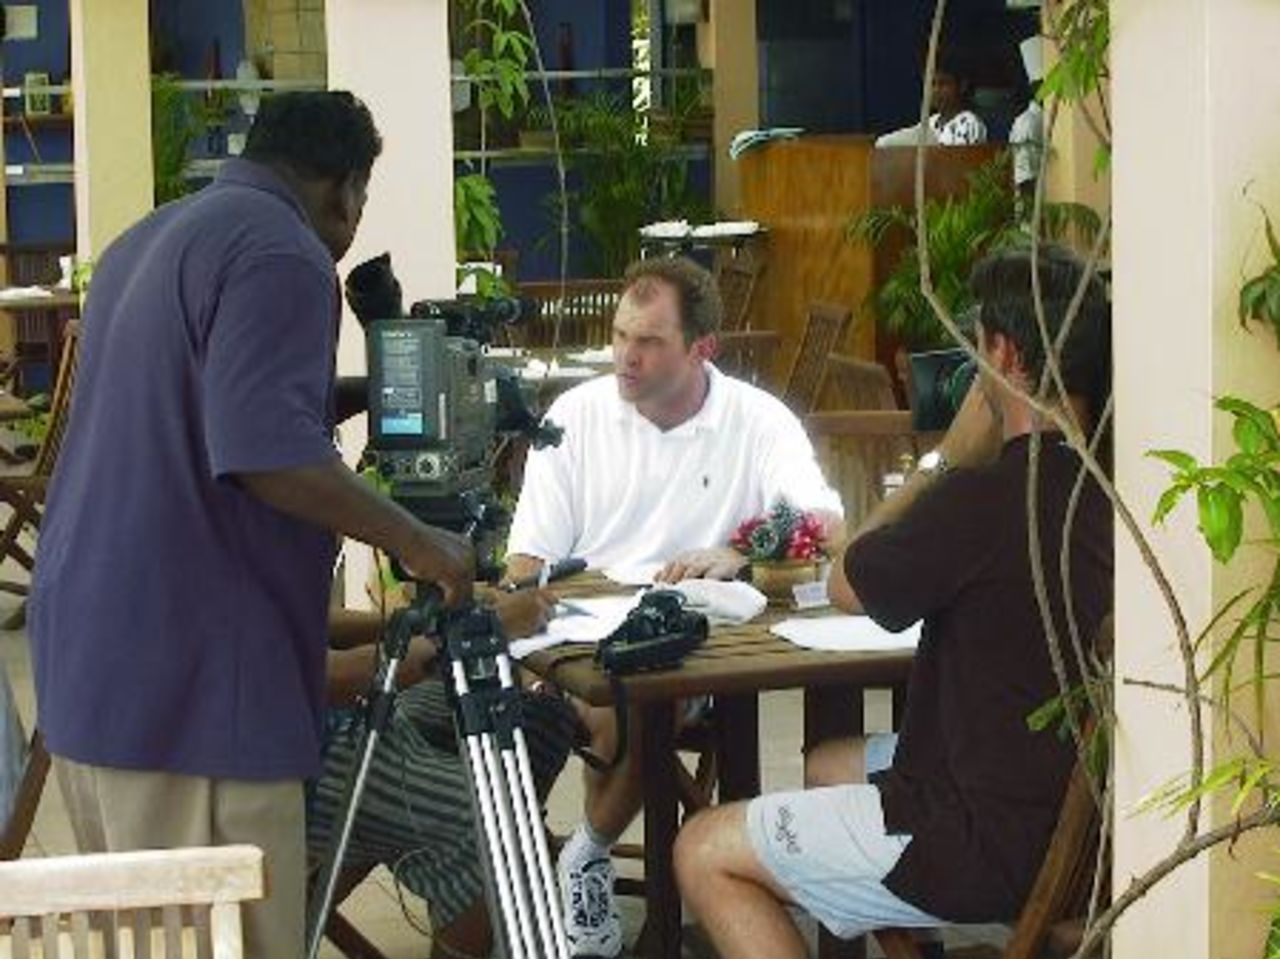 Martin Crowe being interviewed by Fiji One TV